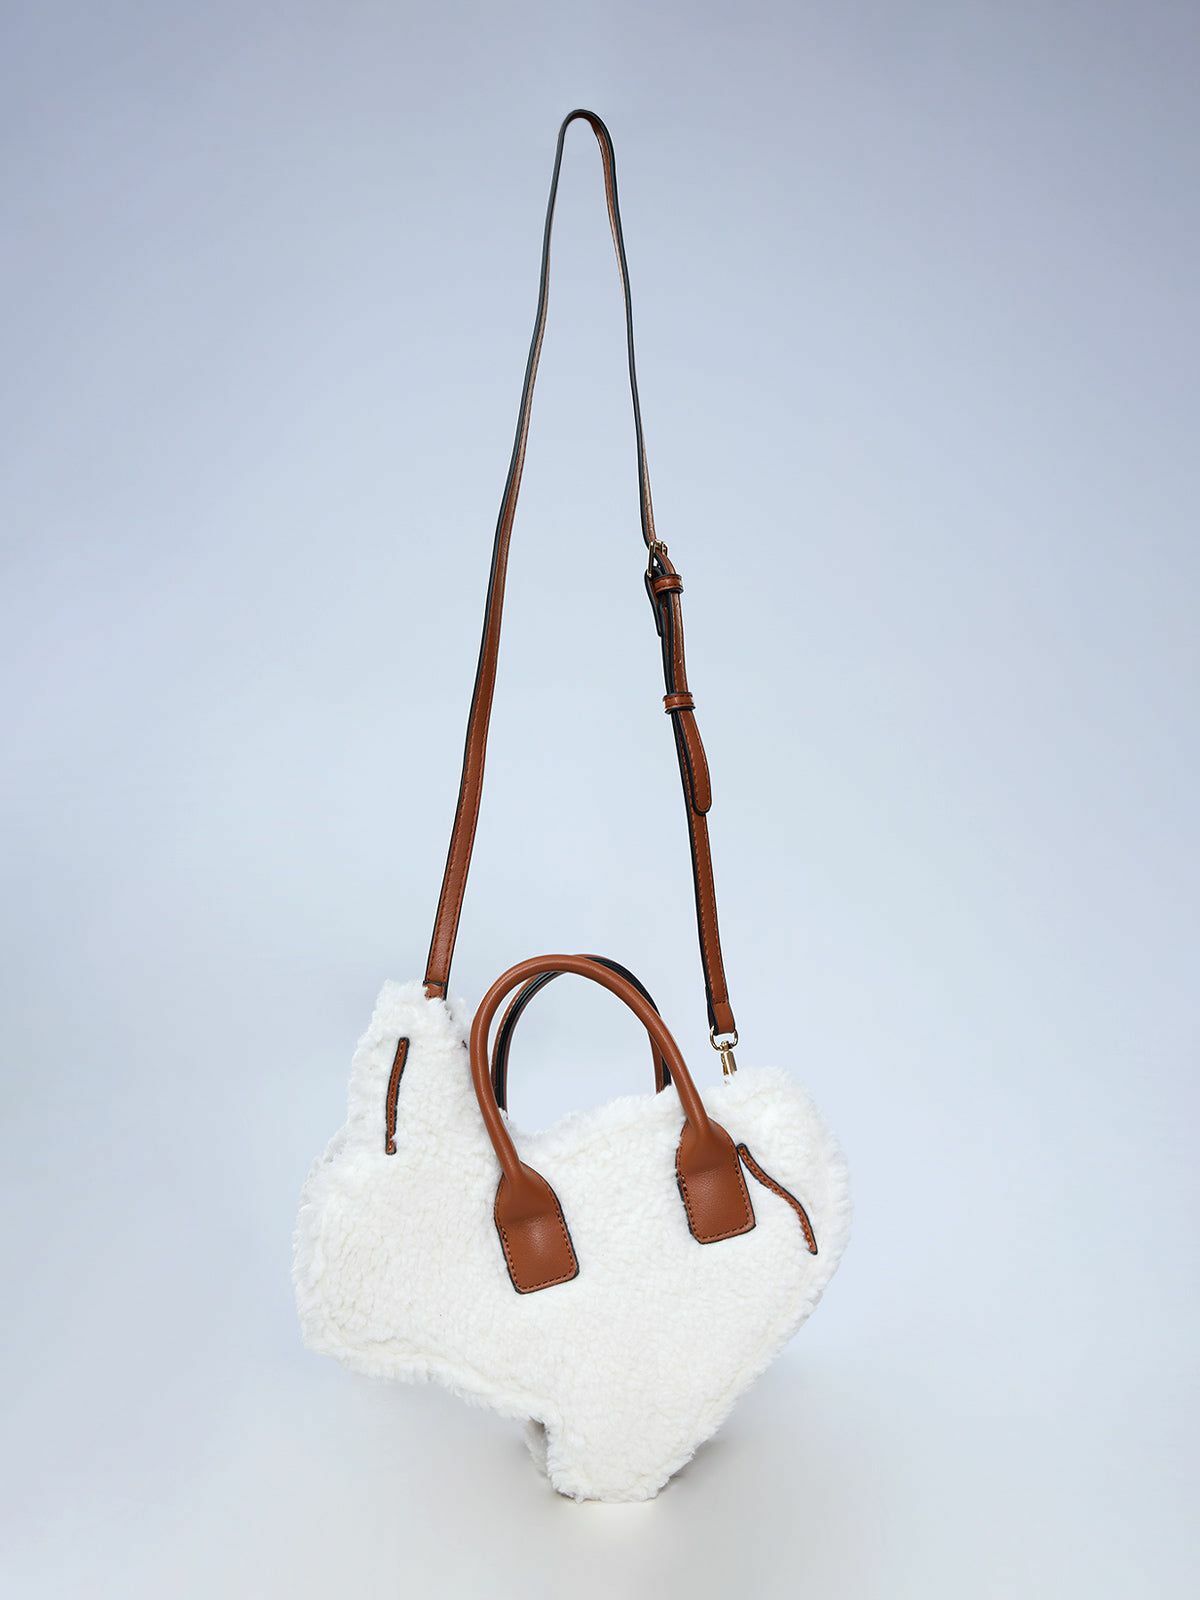 plush rabbit bag cute & quirky urban accessory 6512